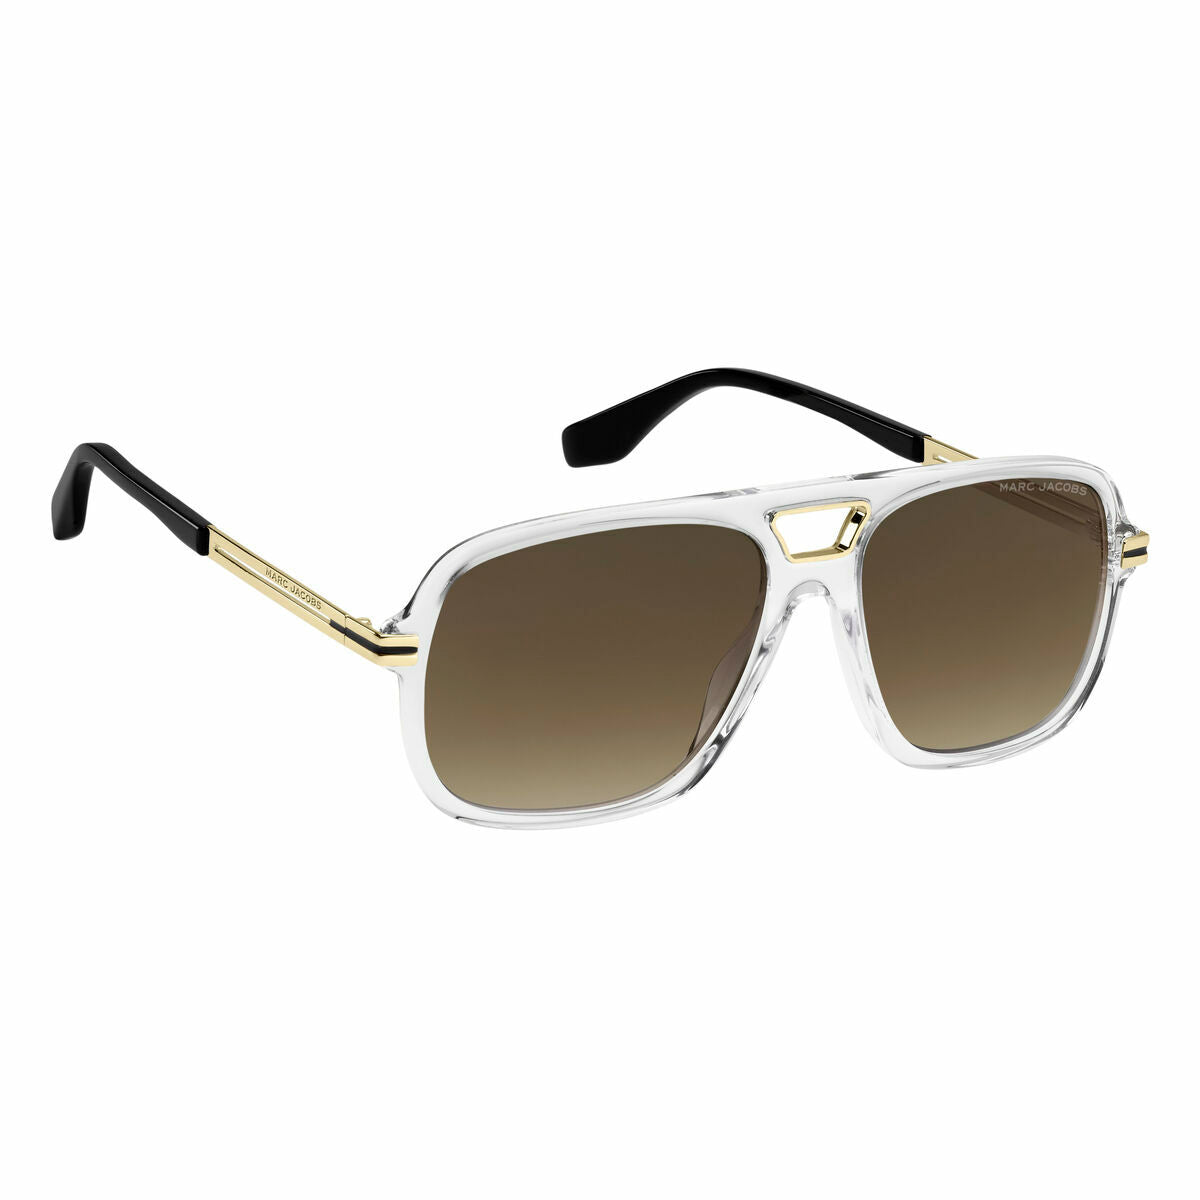 Kaufe Herrensonnenbrille Marc Jacobs MARC 415_S bei AWK Flagship um € 246.00